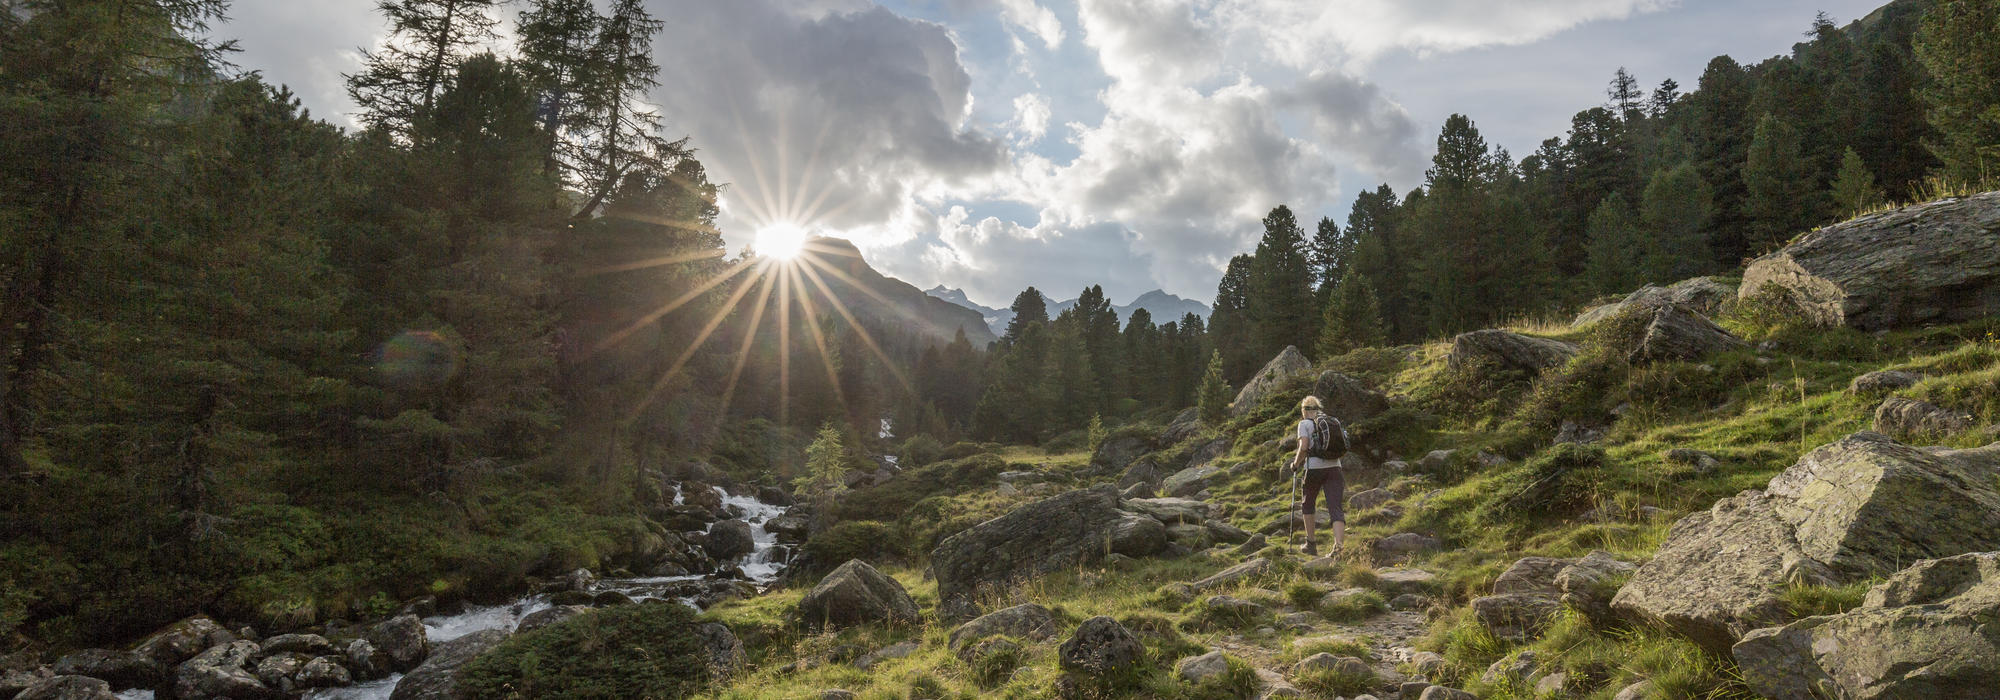 Wandern in der Schobergruppe, Nationalpark Hohe Tauern | © TVB Osttirol / Bardelot Jean Paul - Quest4Visuality